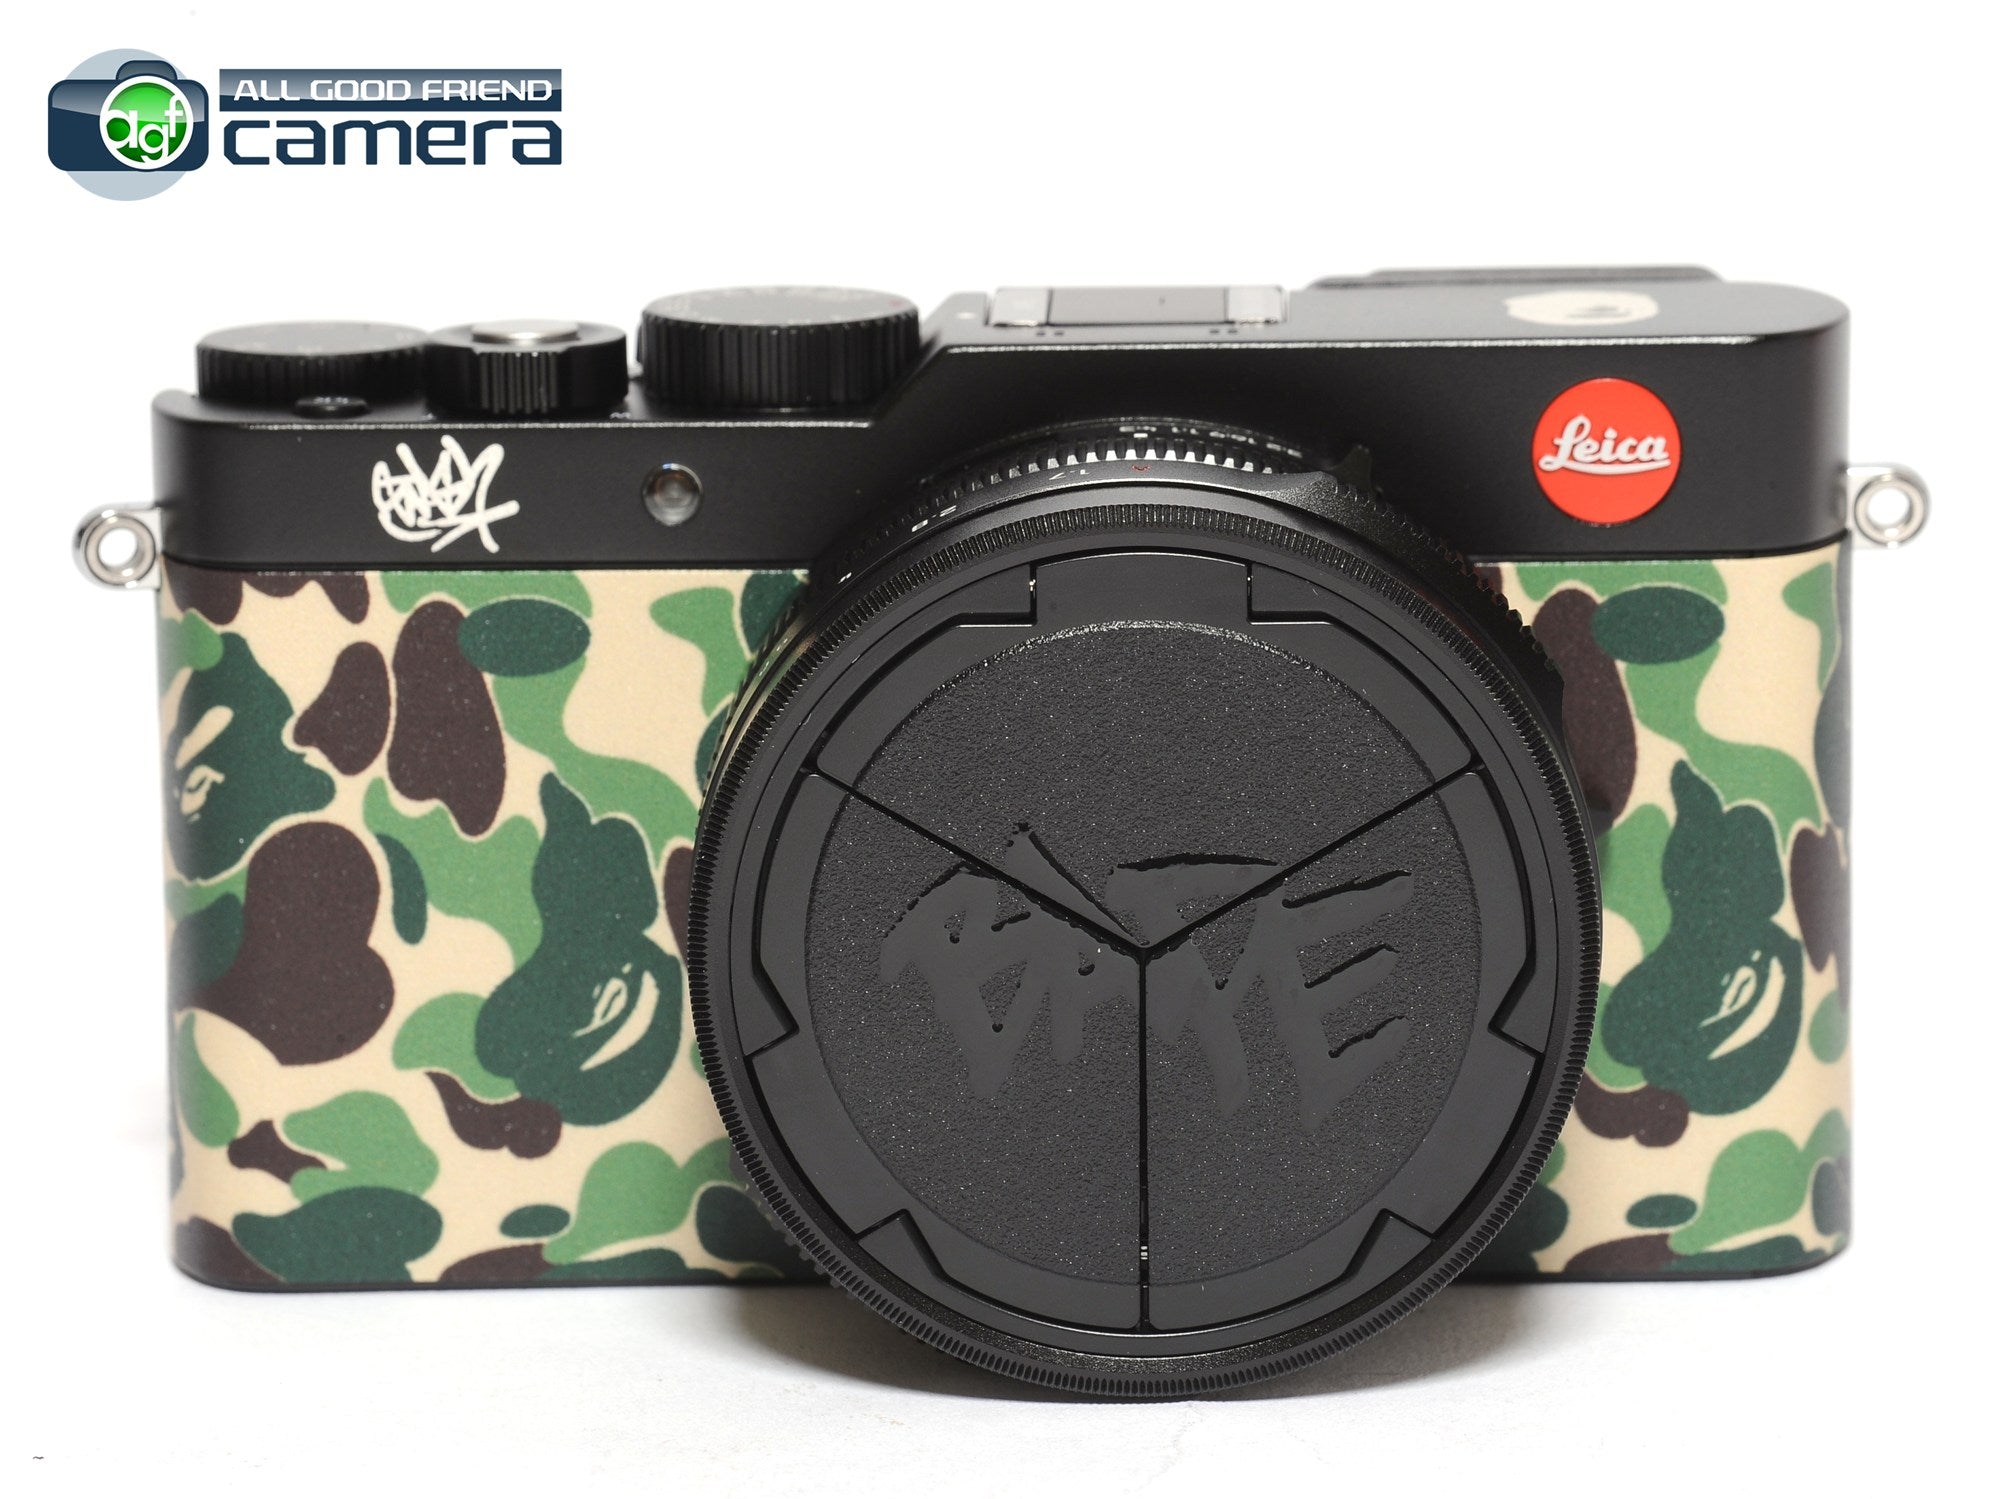 Leica D-Lux 7 Case (Black) at